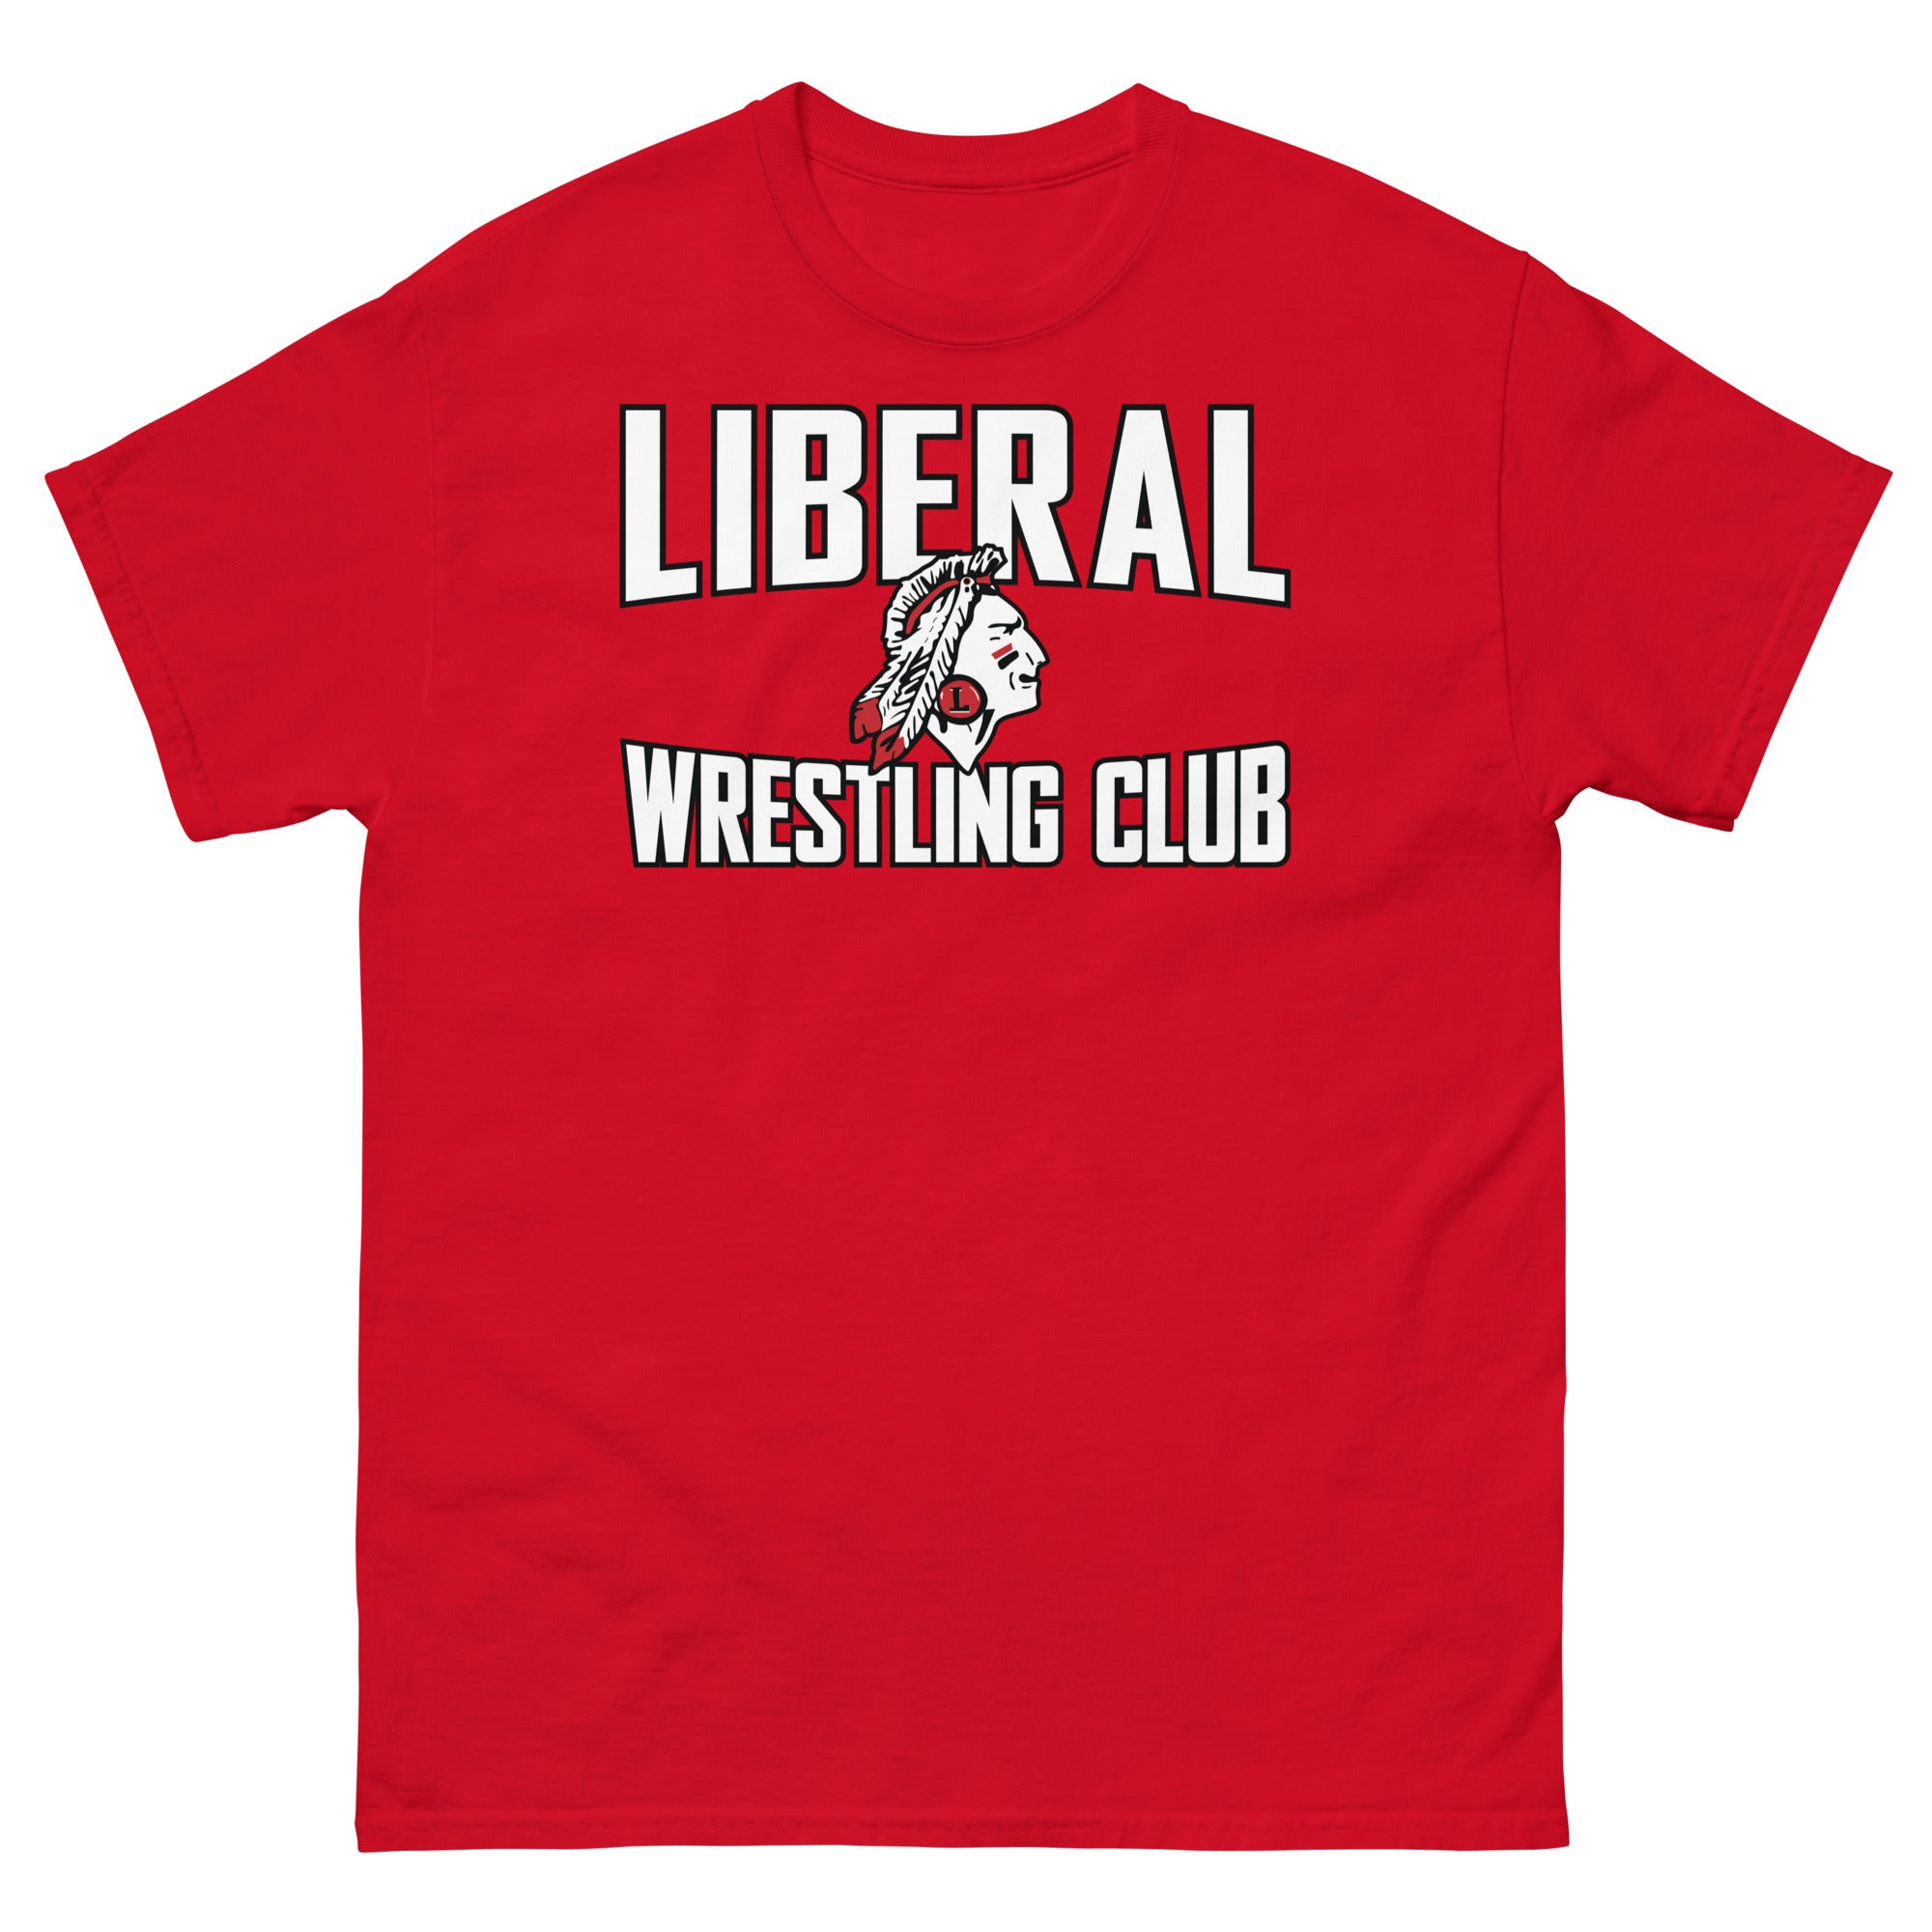 Liberal Wrestling Club 1 Men's classic tee